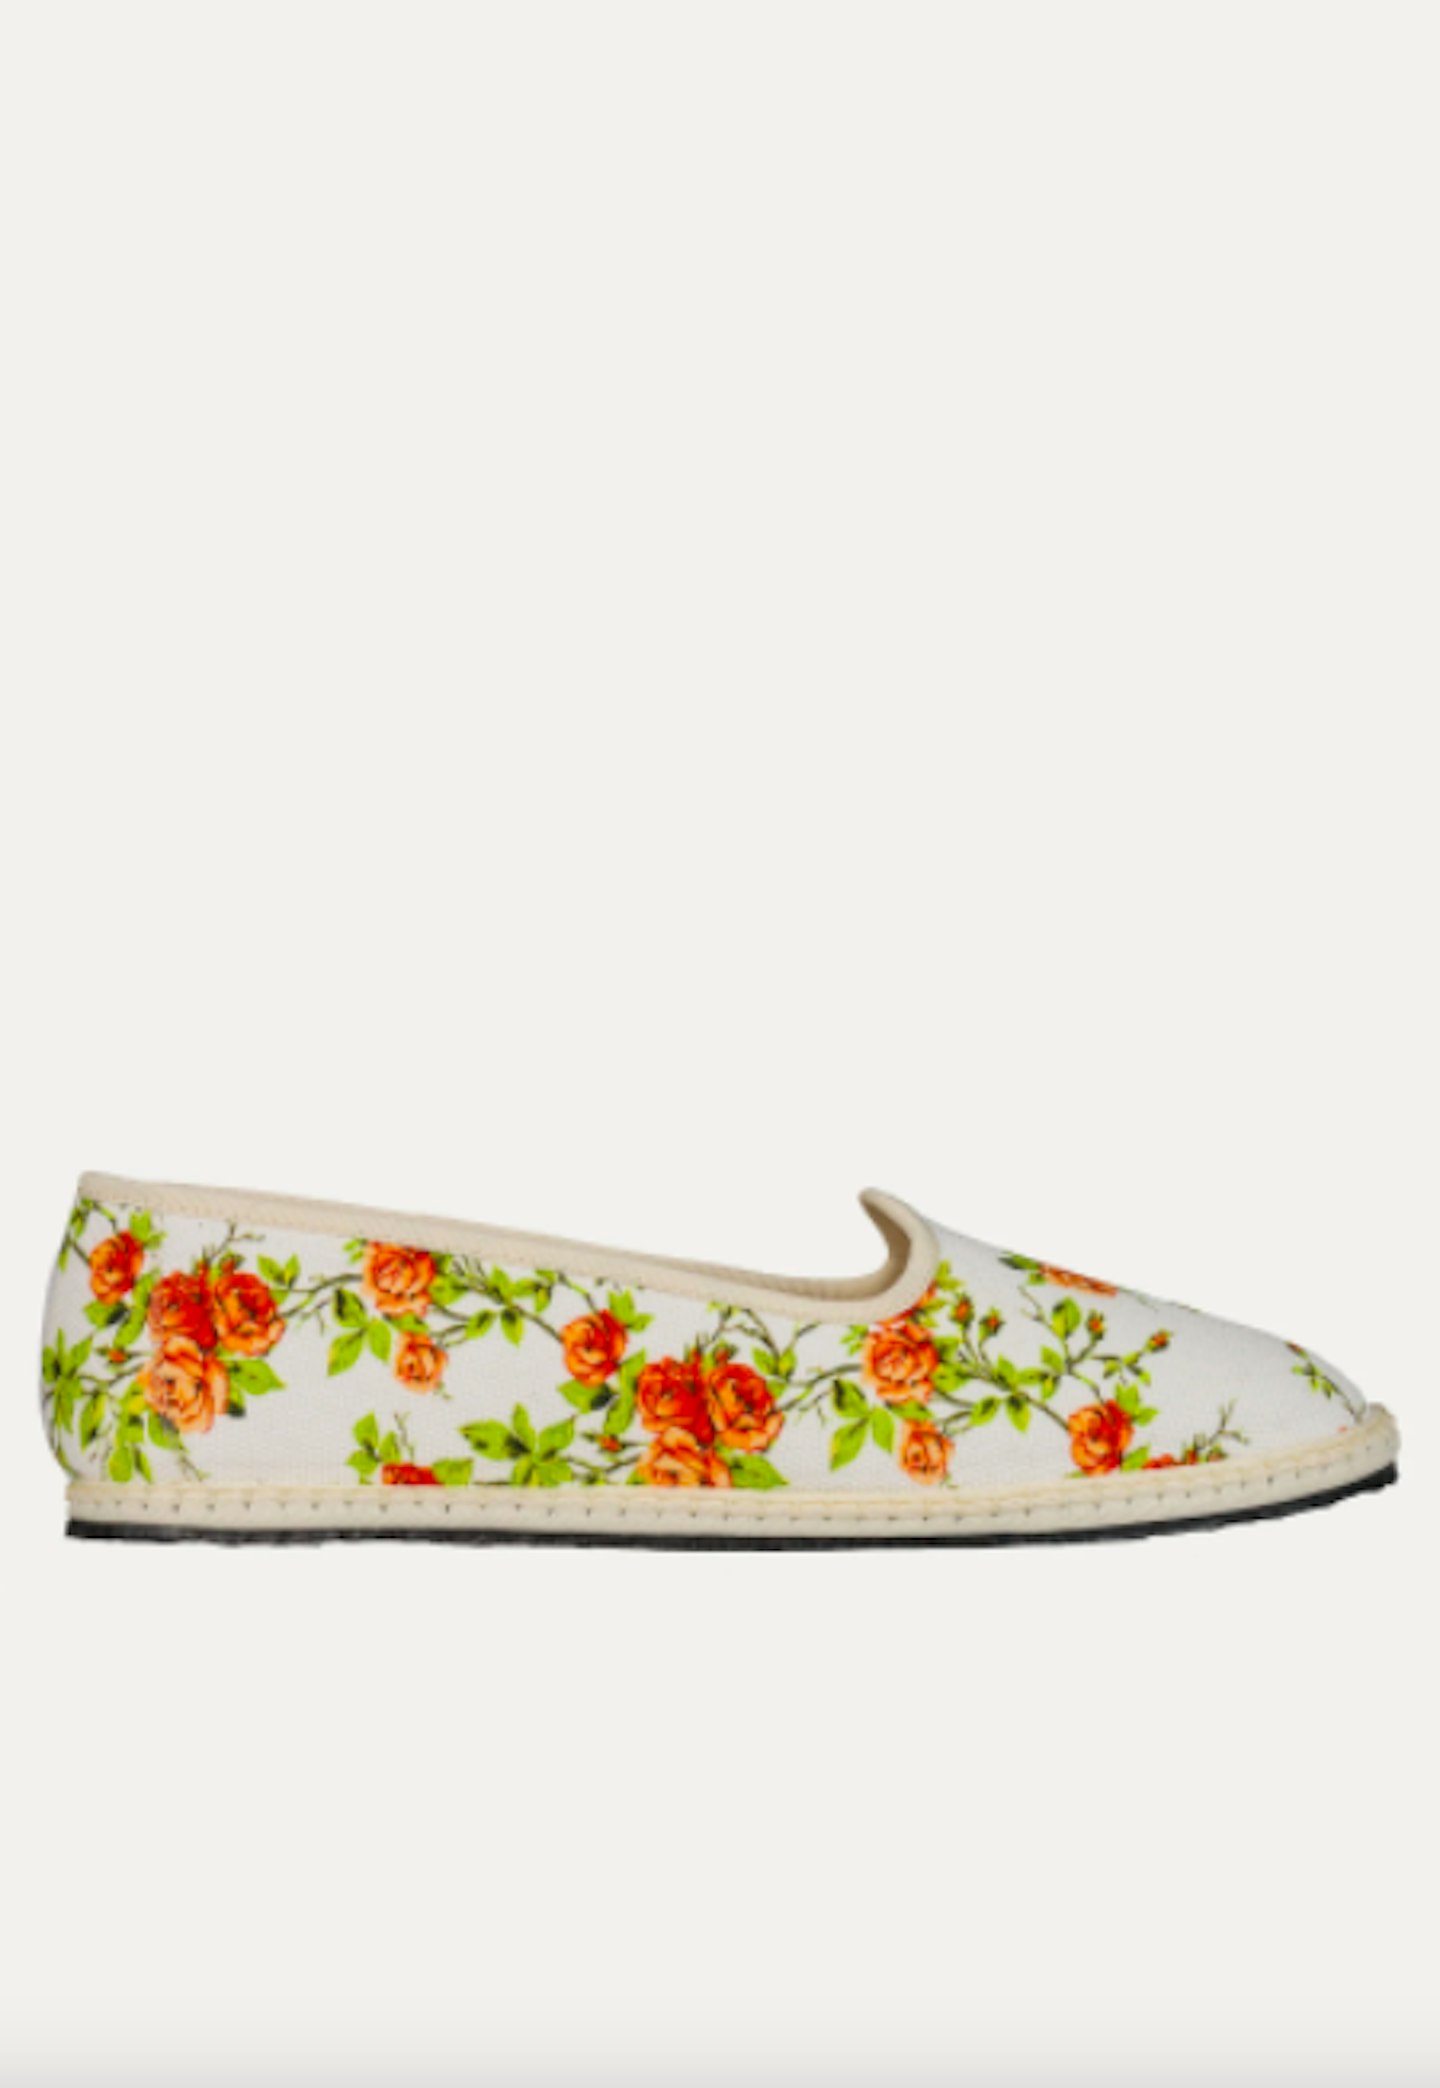 Classic Furlane Slipper in Mixed Floral, £140